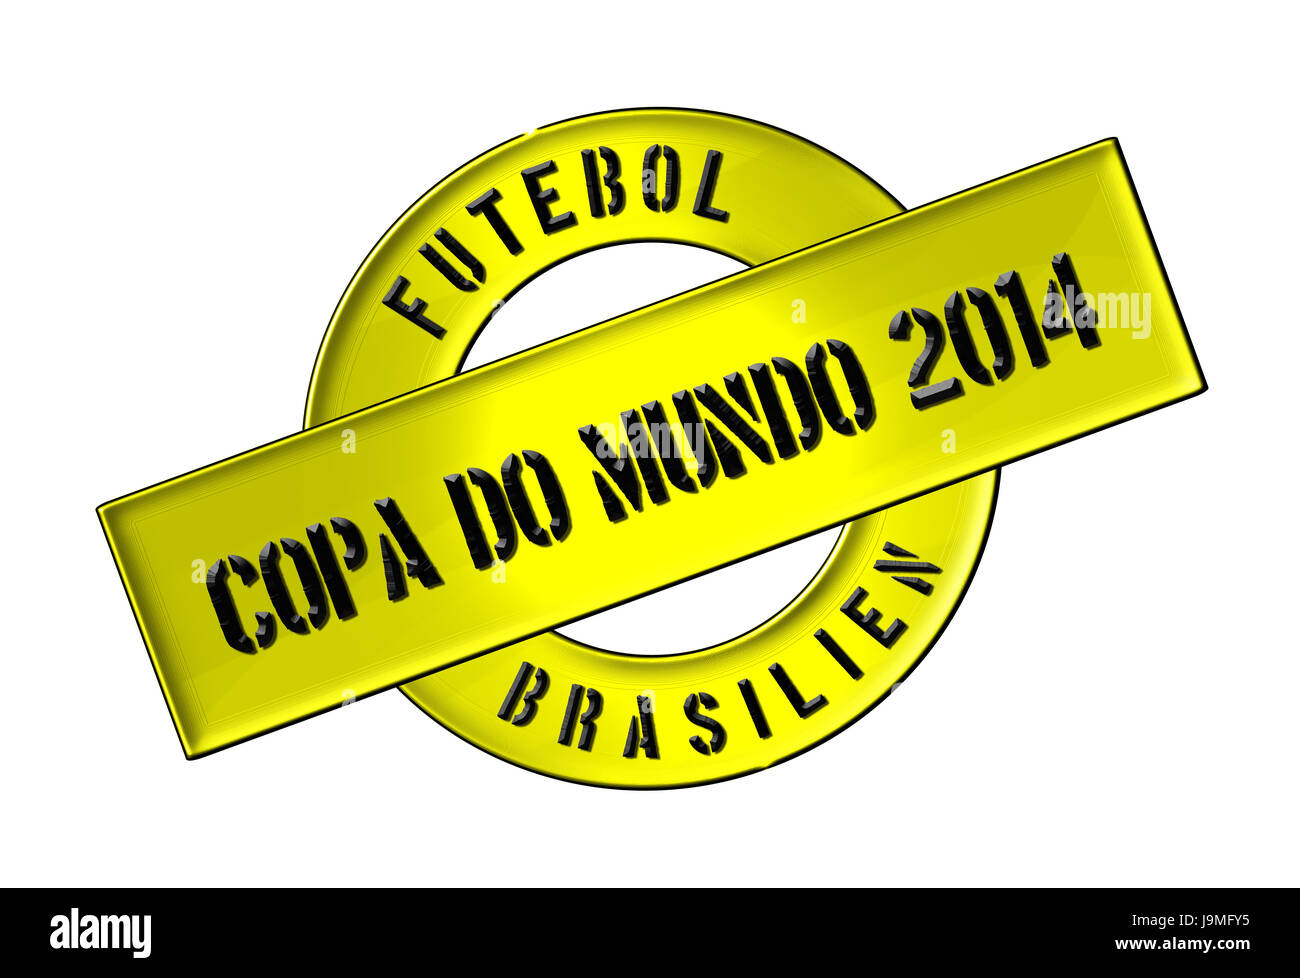 brazil, wm, seal, banners, brazil, wm, seal, football, banners, fussball, 2014, Stock Photo